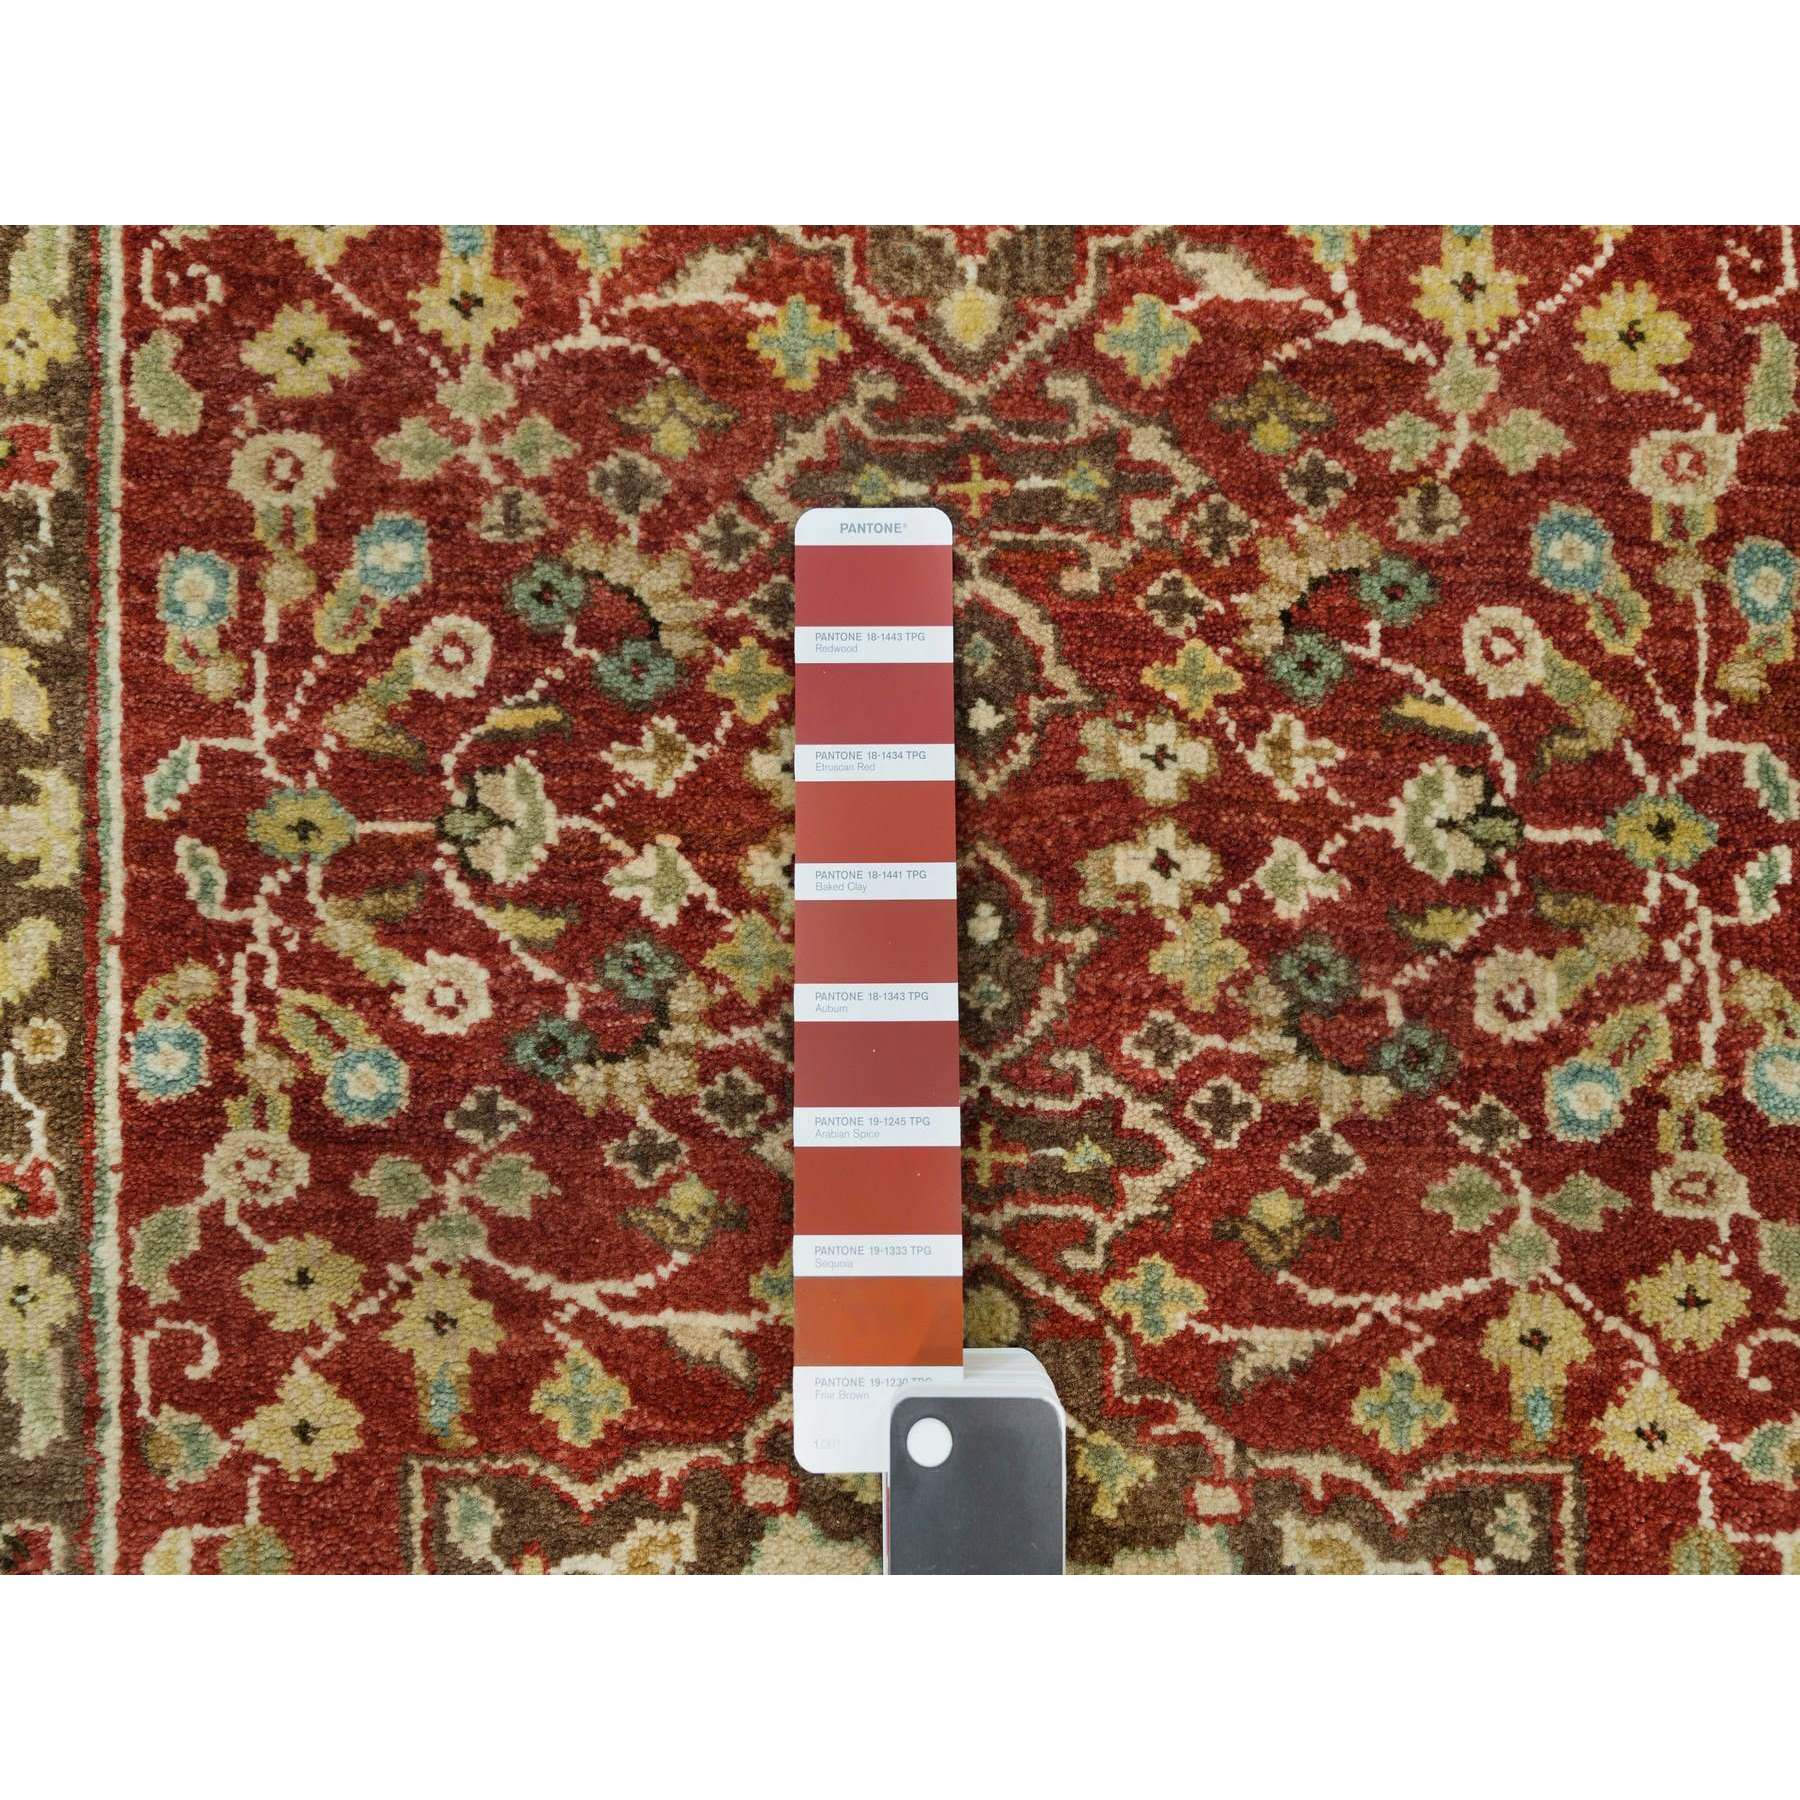 2'6"x10'1" Upsdell Red, Natural Dyes, Dense Weave, Hand Woven, Antiqued Tabriz Haji Jalili Design, Organic Wool, Soft and Lush Pile, Runner Oriental Rug 